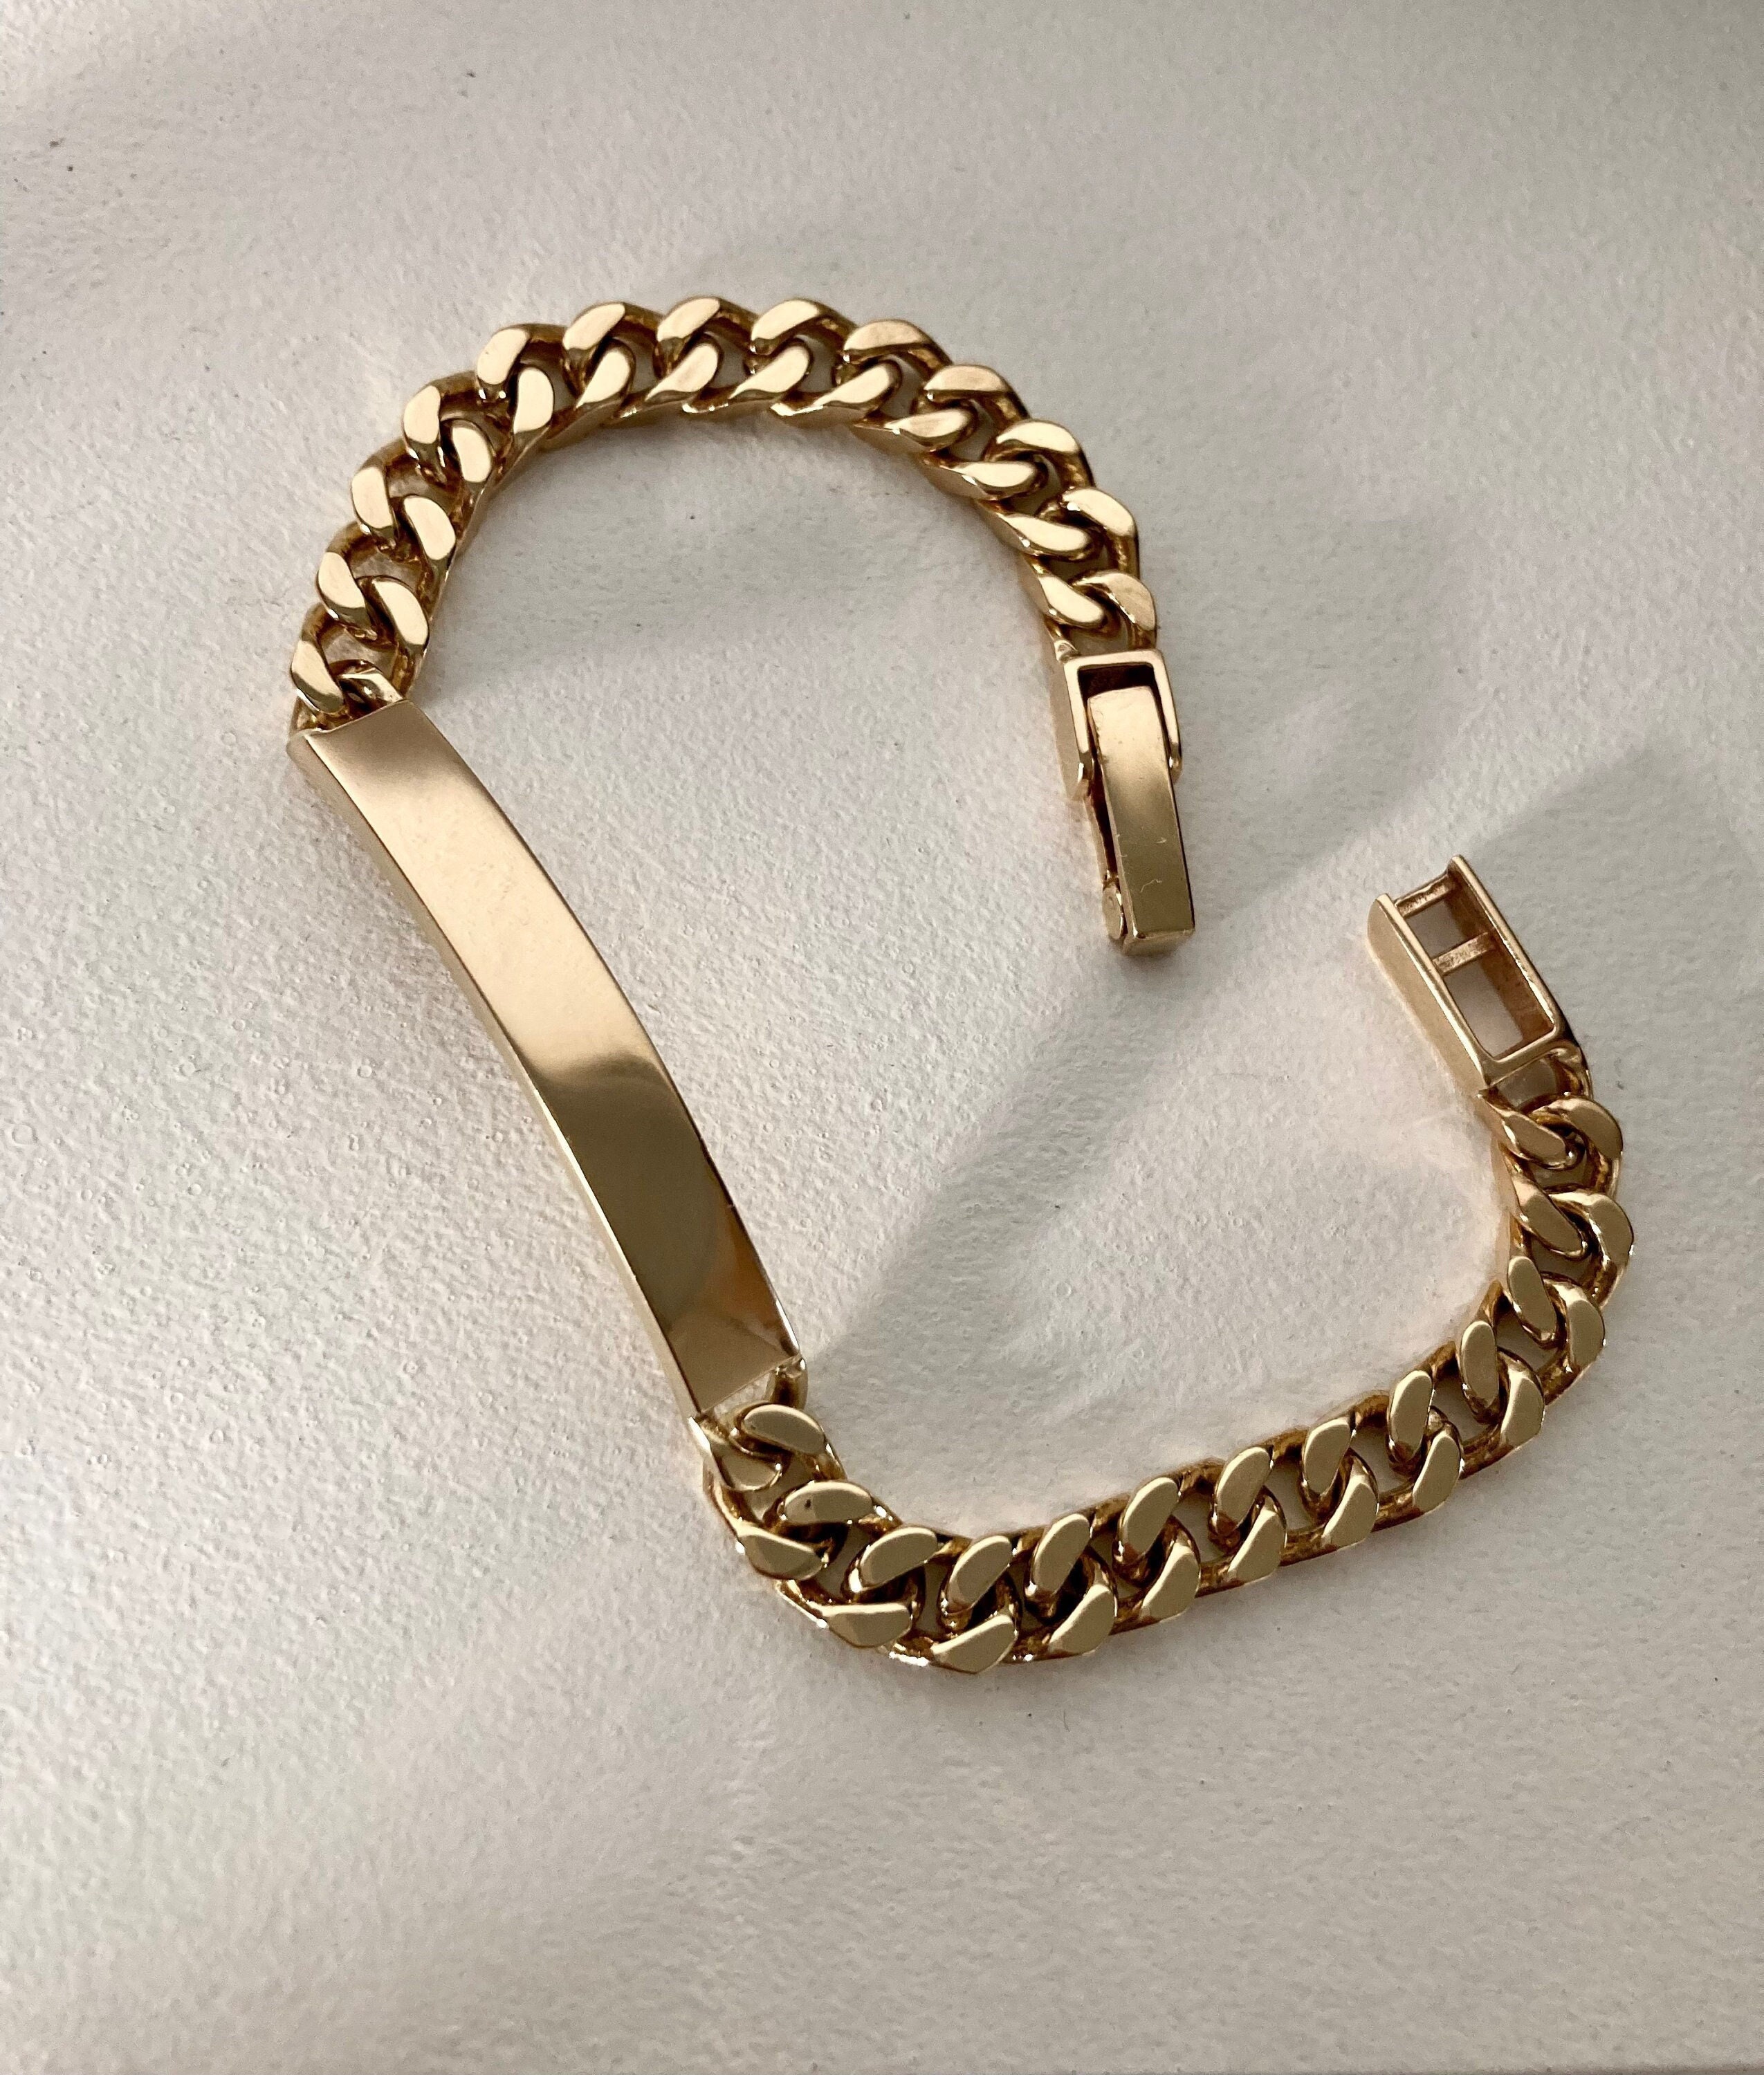 Wire Wrapped Bracelets – Suga's, Sheas, & Thangs